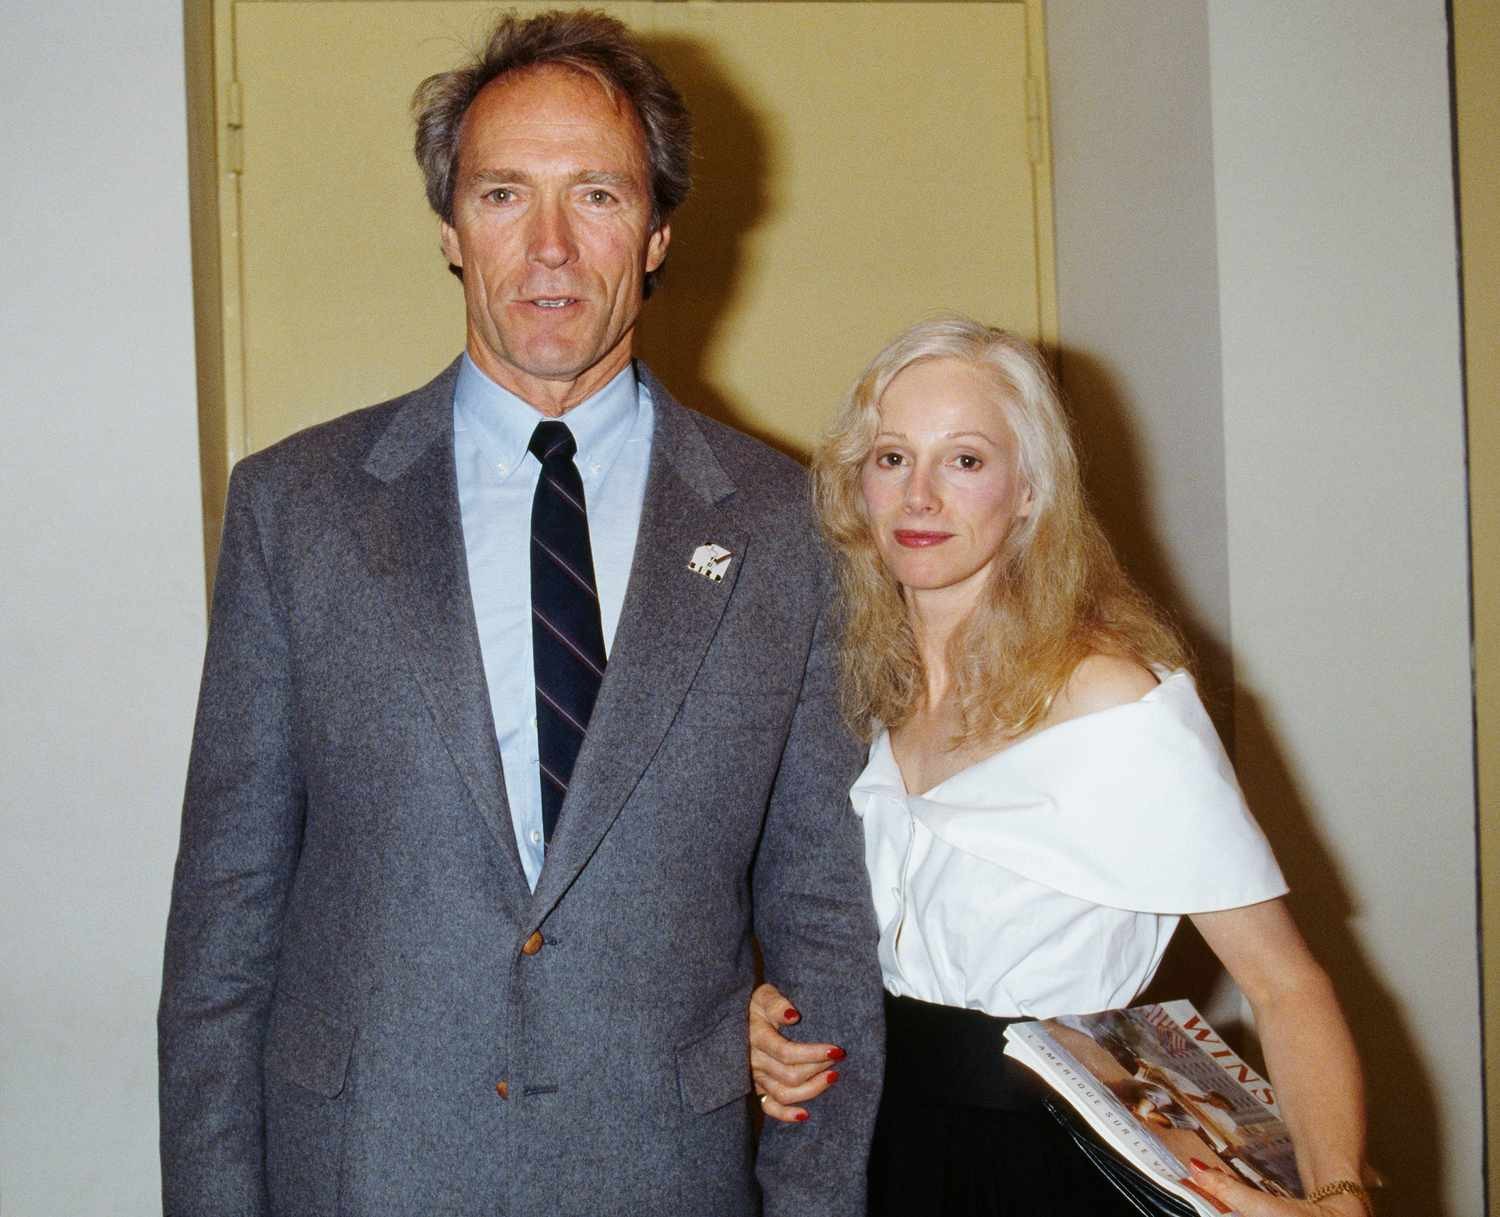 Clint Eastwood and Sondra Locke